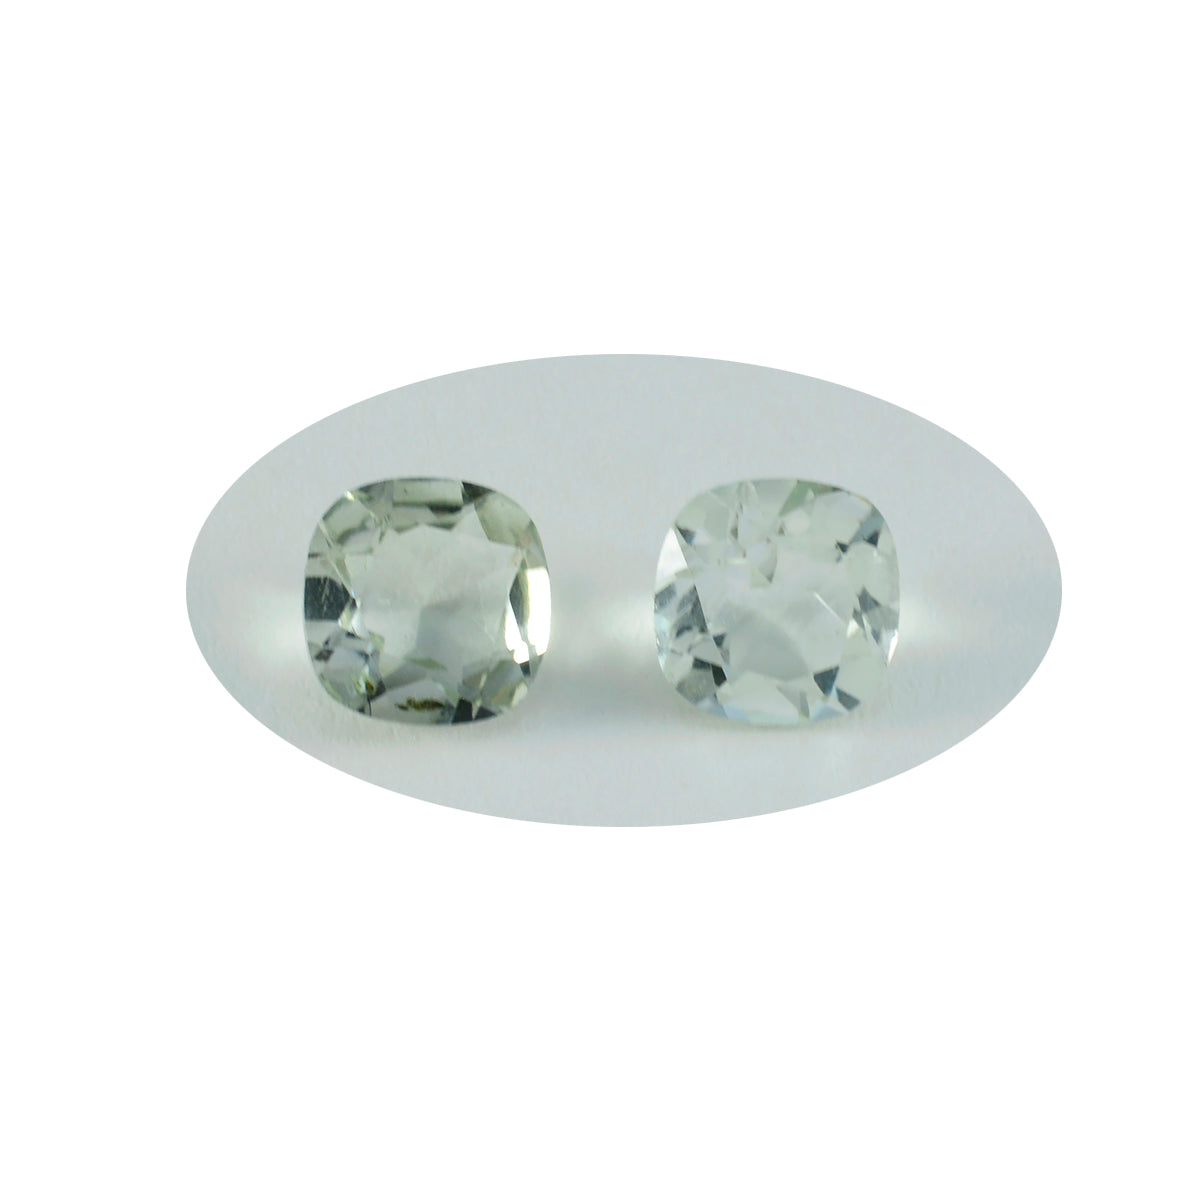 Riyogems 1PC Green Amethyst Faceted 8x8 mm Cushion Shape astonishing Quality Loose Gemstone